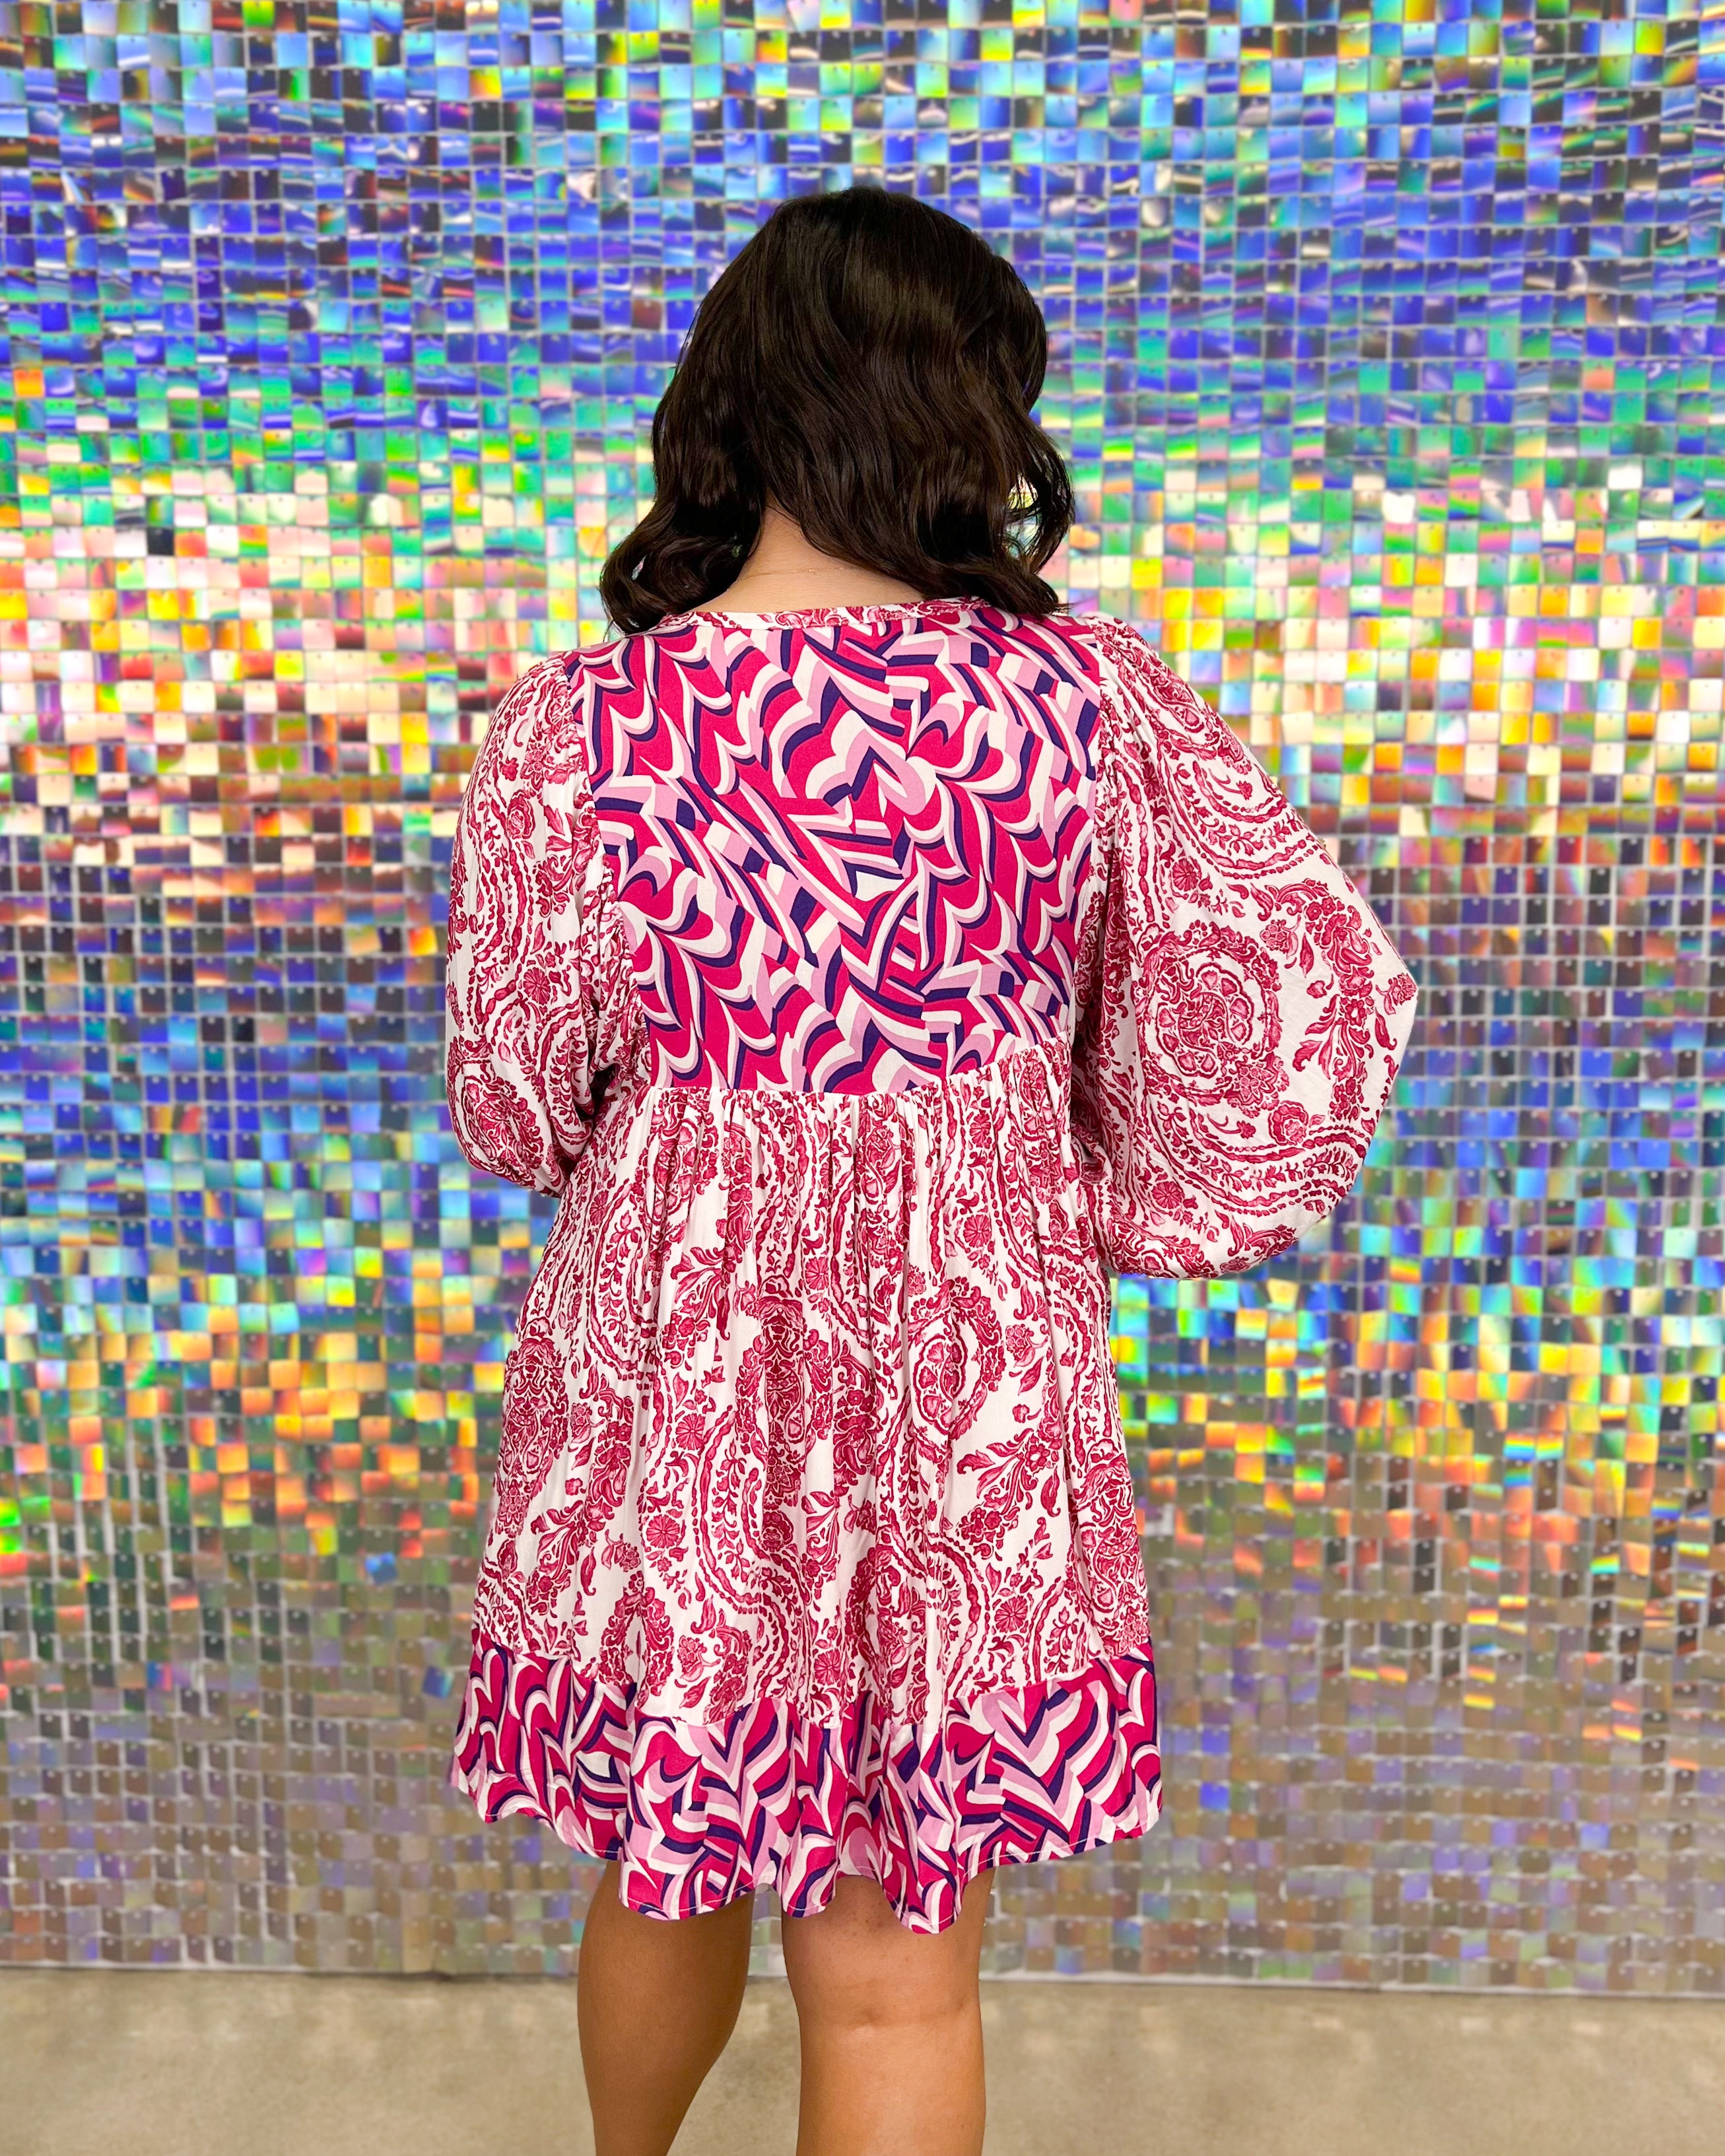 Entro Qualo Dress - Fuchsia, pink, purple, tiered, long sleeve, print